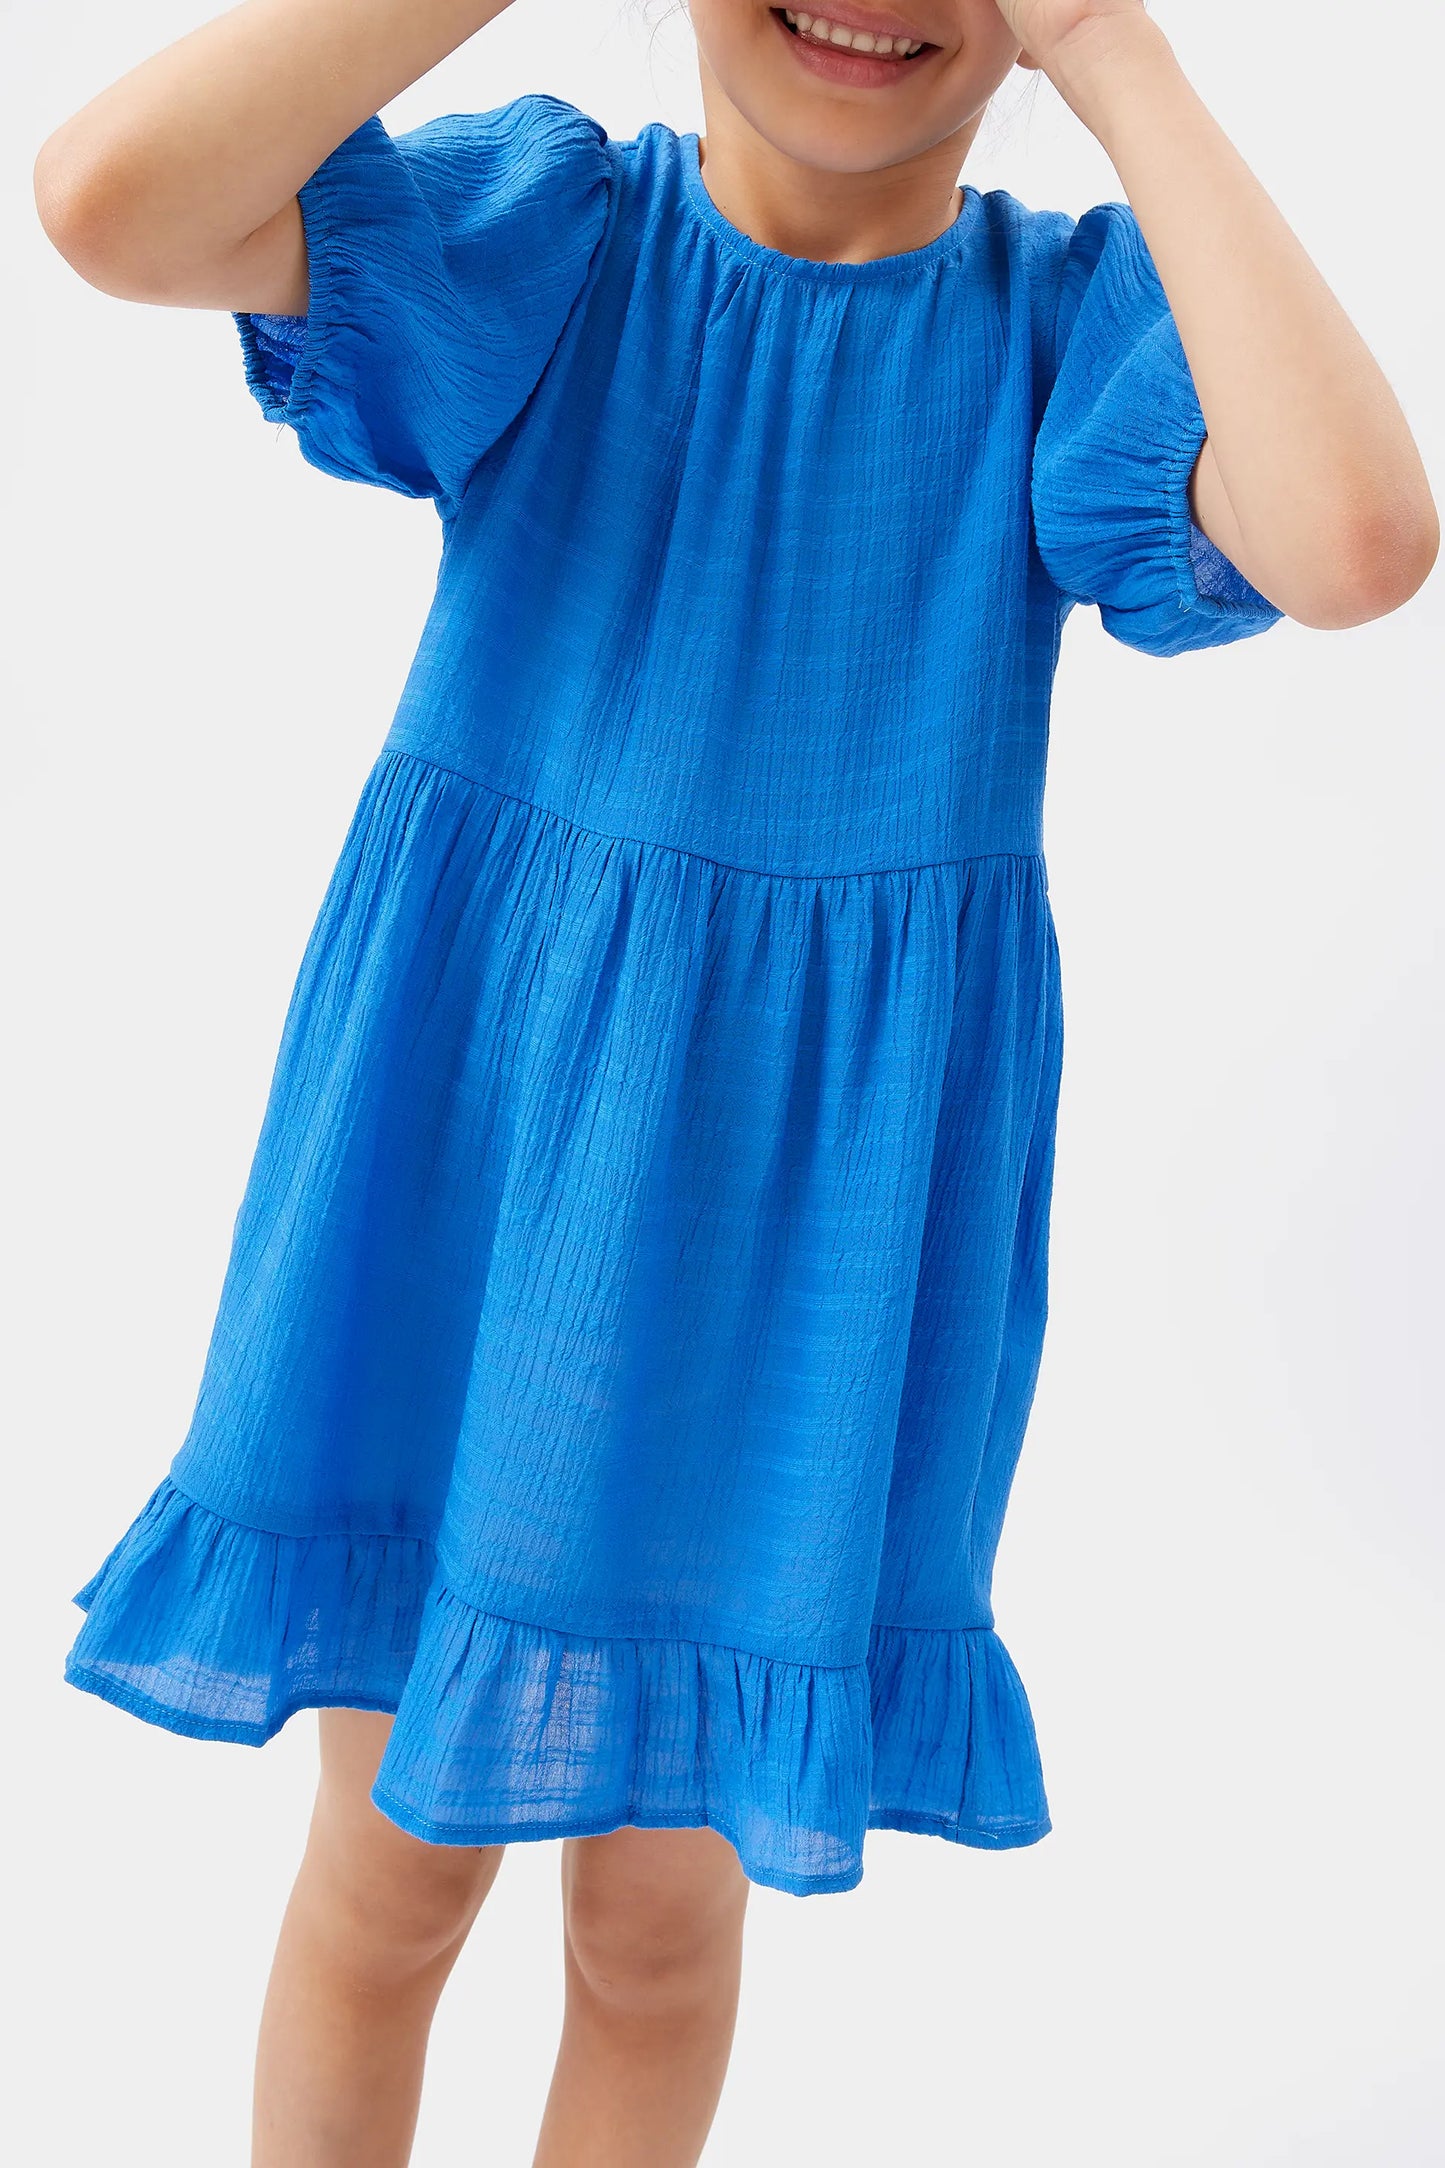 Vestido corto de niña azul